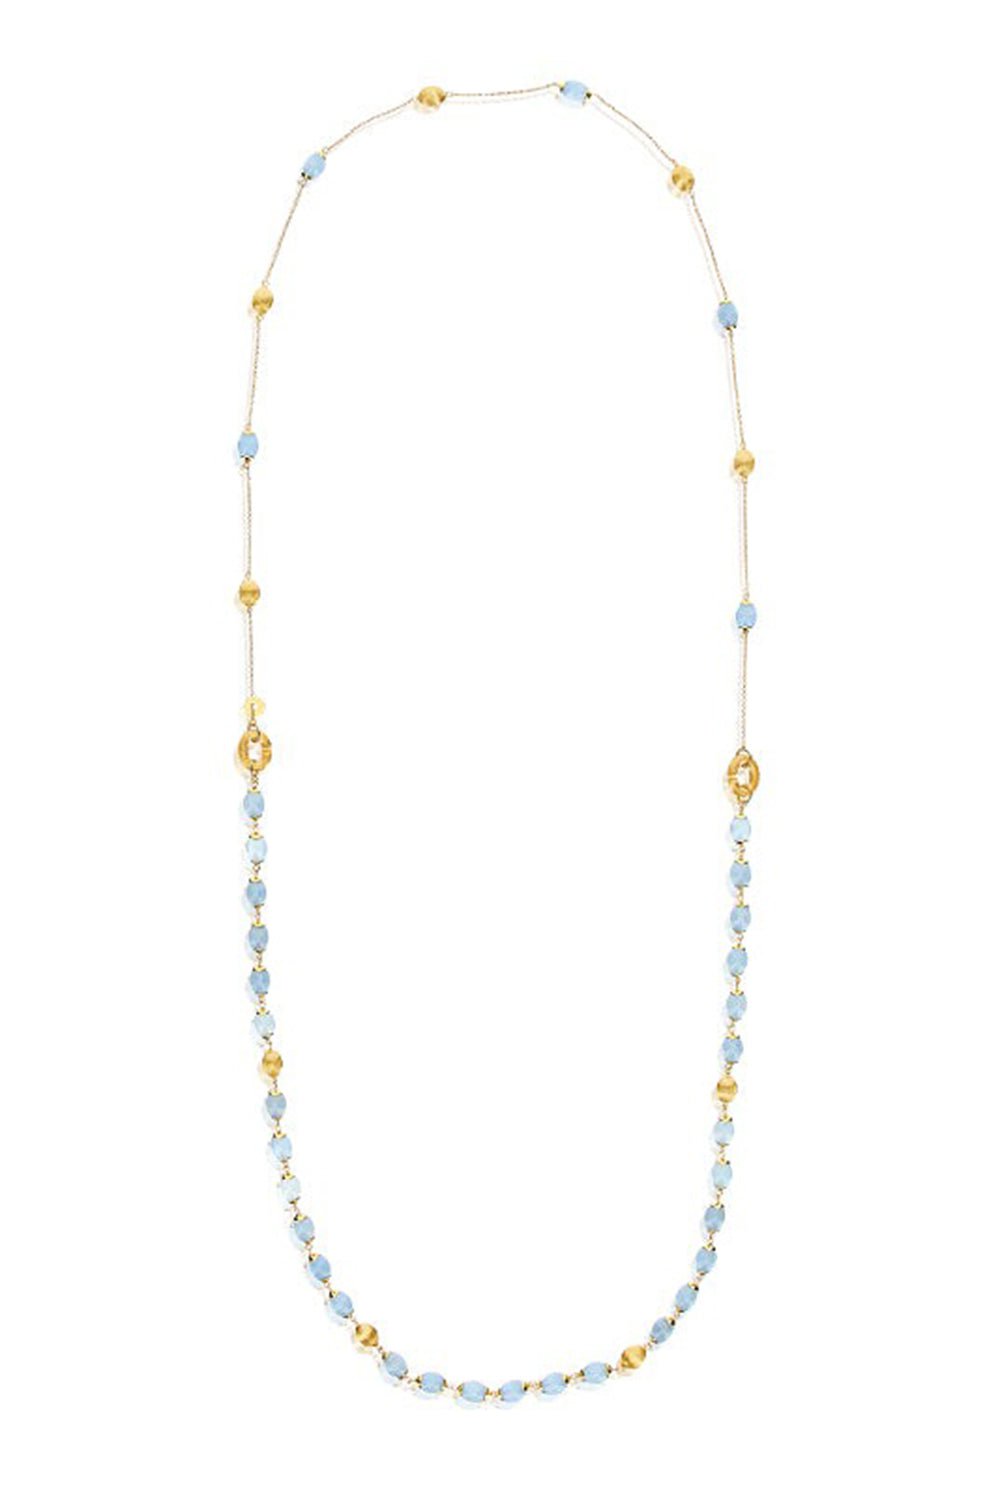 NANIS-Azure Aquamarine 3-in-1 Necklace-YELLOW GOLD